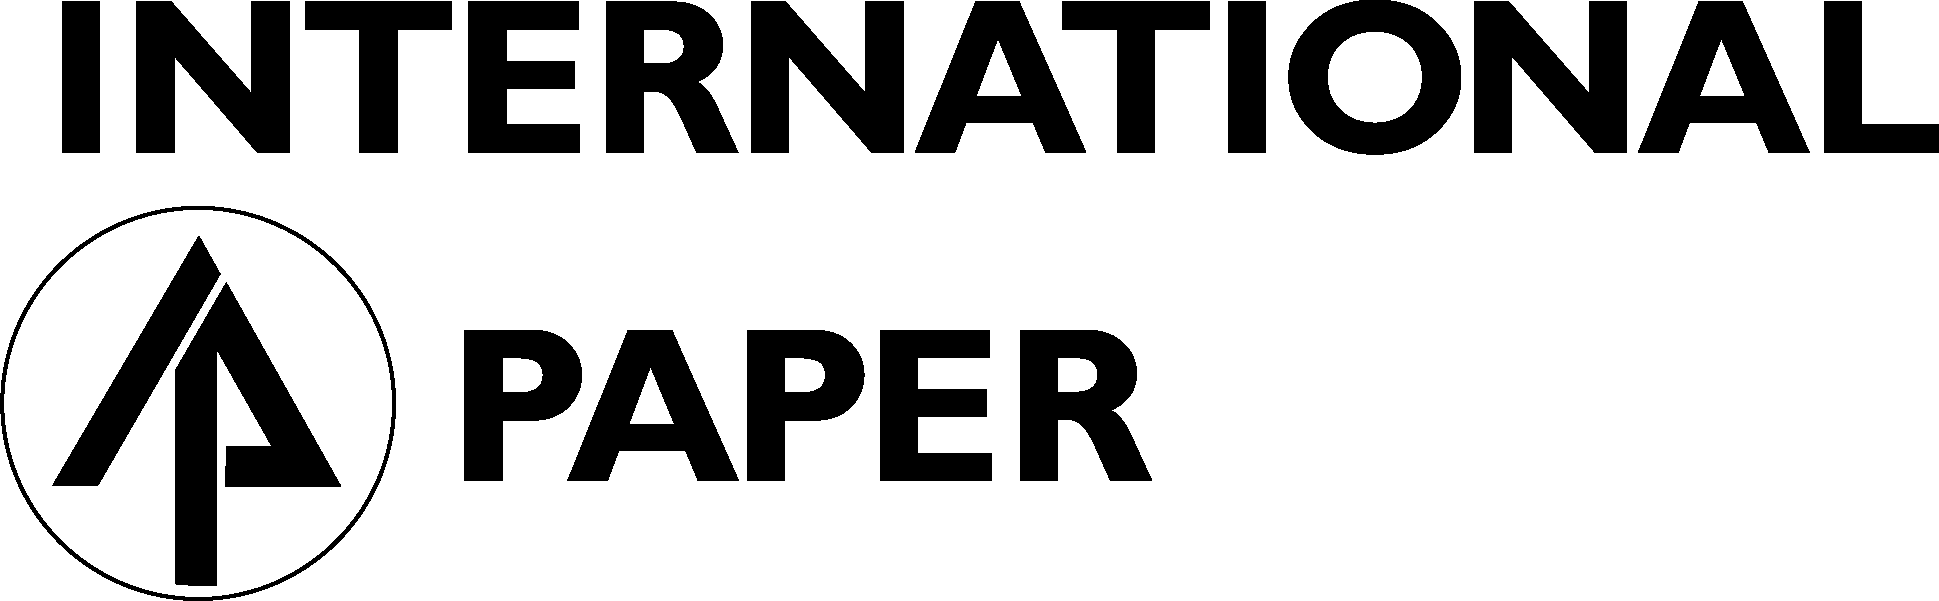 International Paper Logo - International Paper - Free Downloads Graphic Design Materials